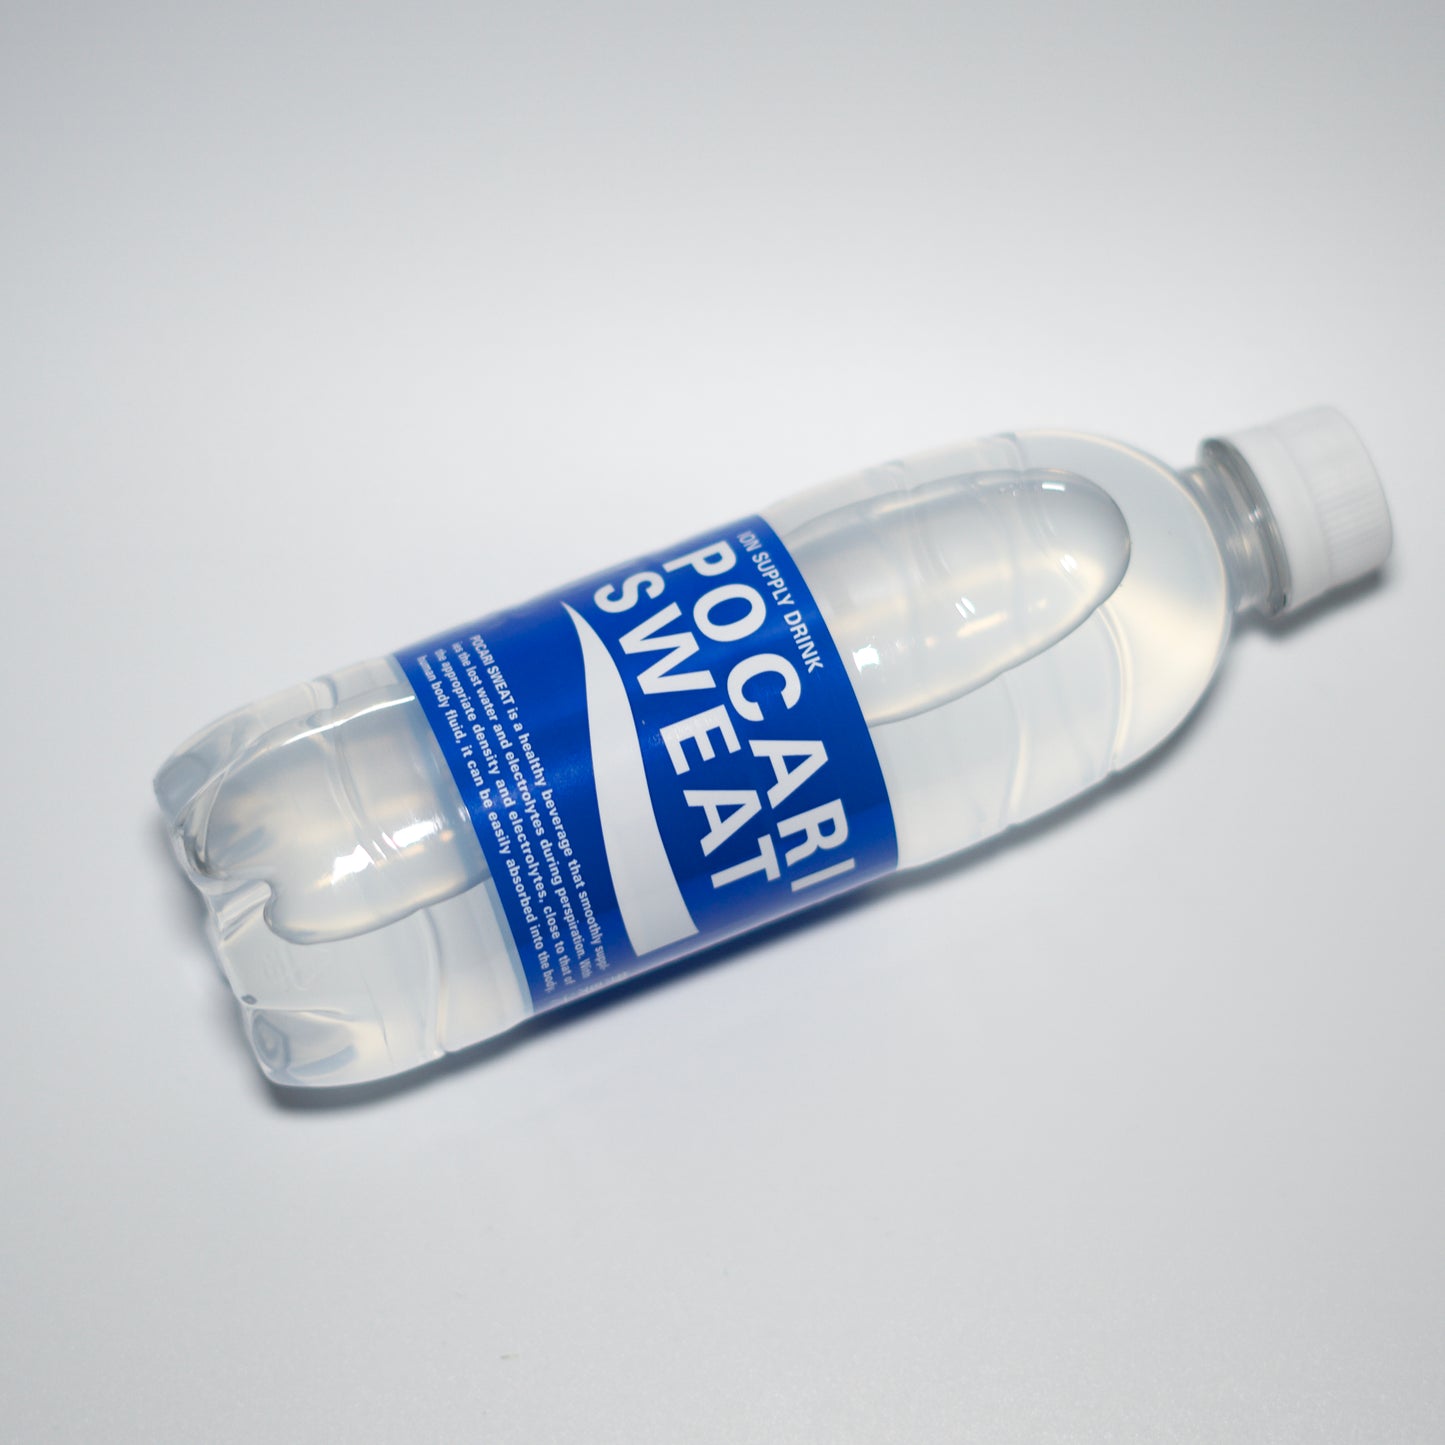 Pocari Sweat Ion Supply Drink 500ml